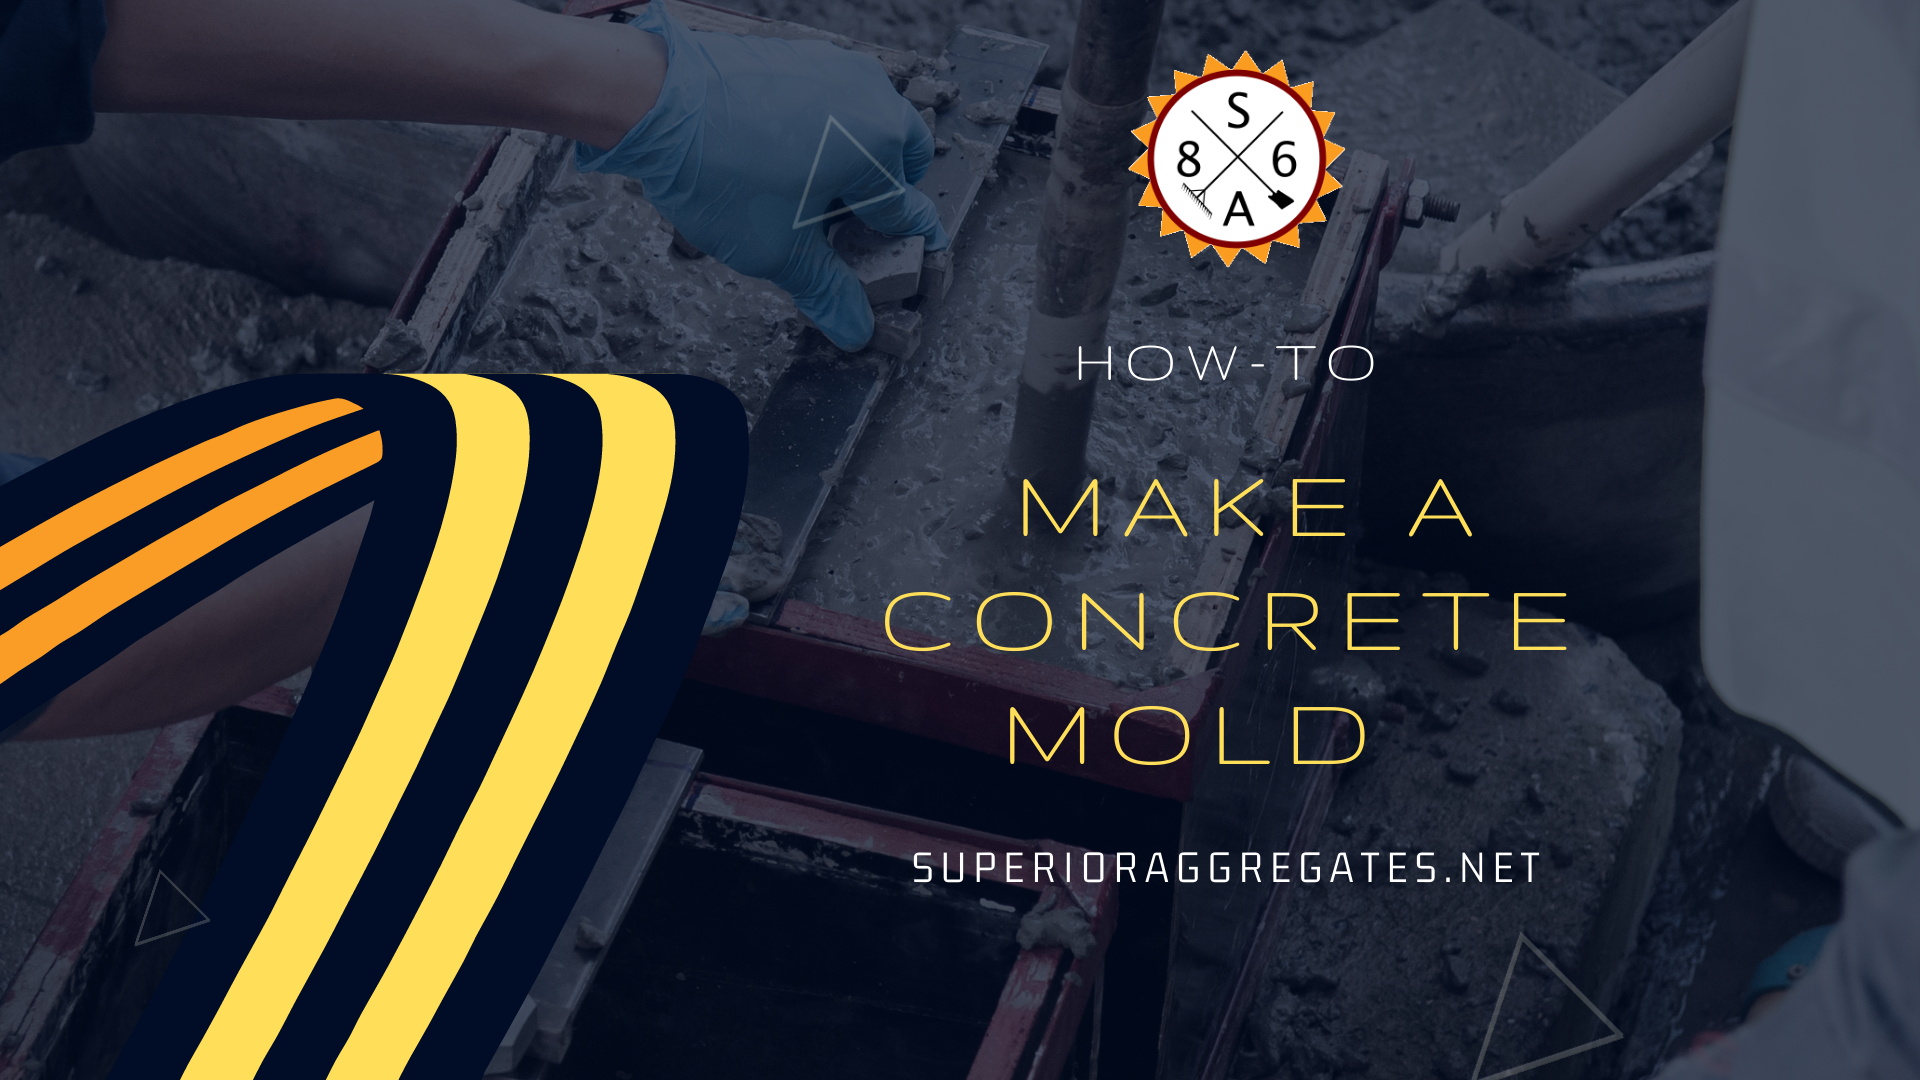 How to Make a Concrete Mold - Superior Aggregates